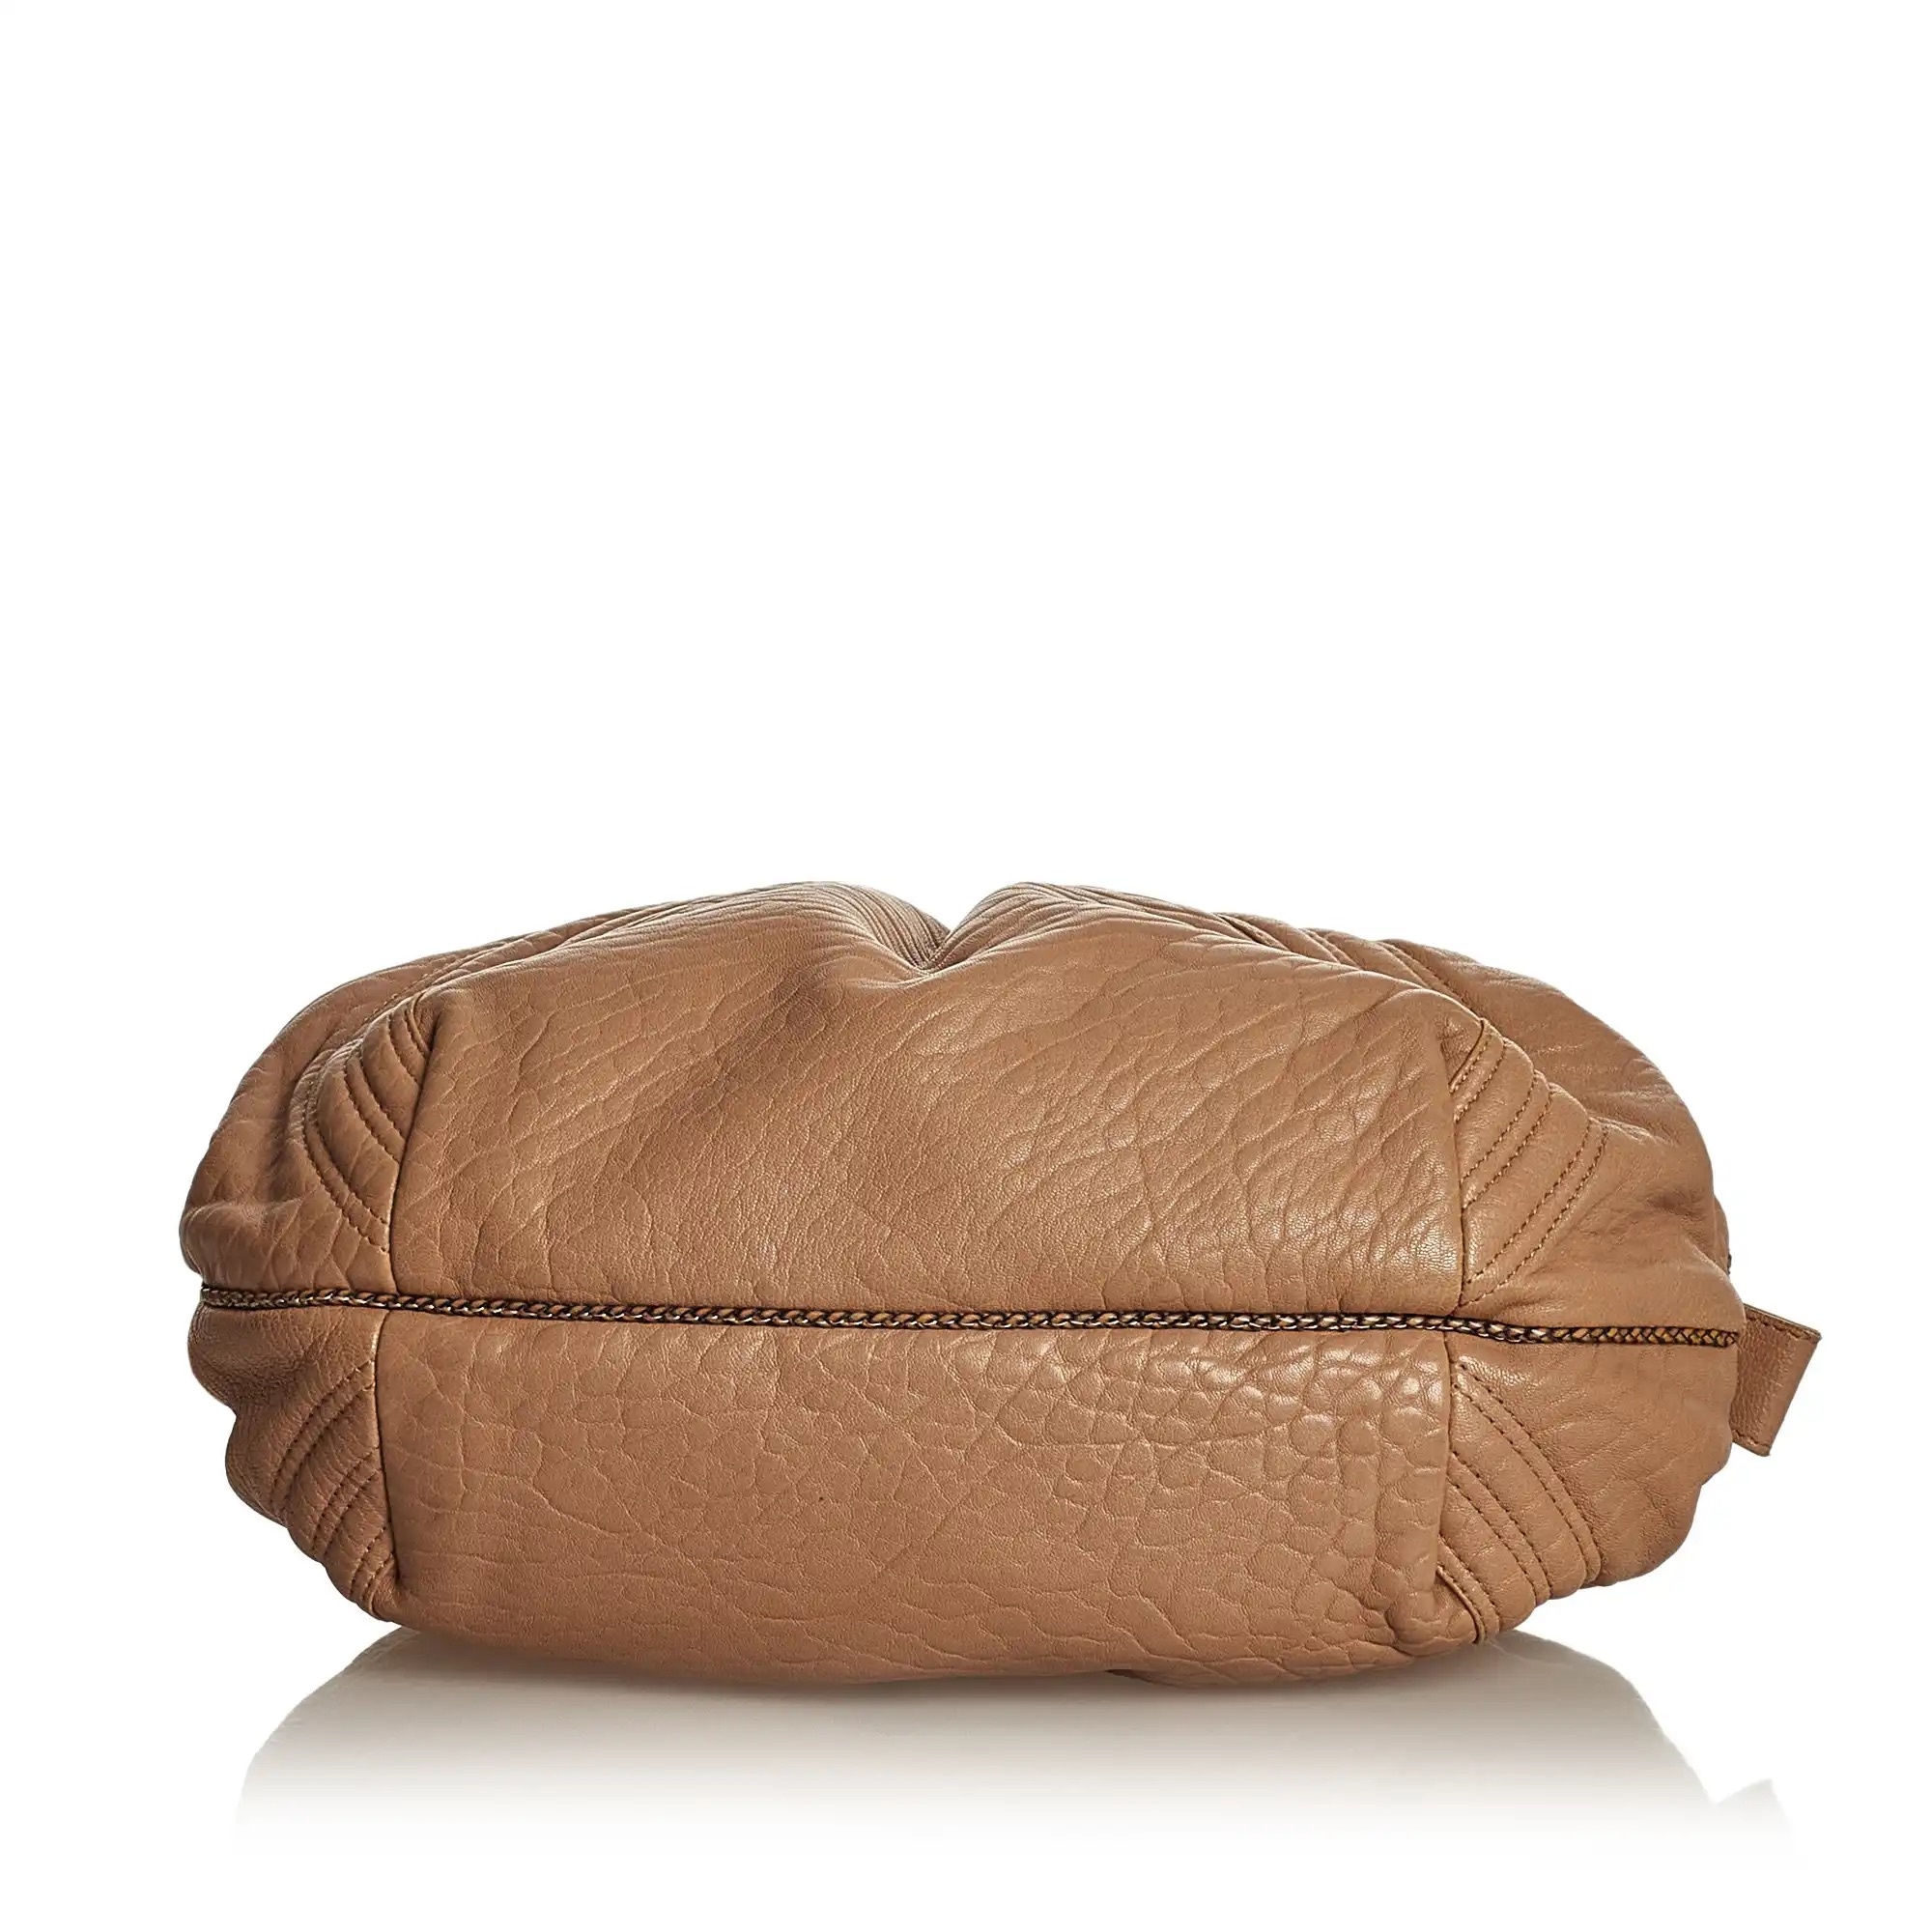 Baby Spy Leather Handbag - Marmalade